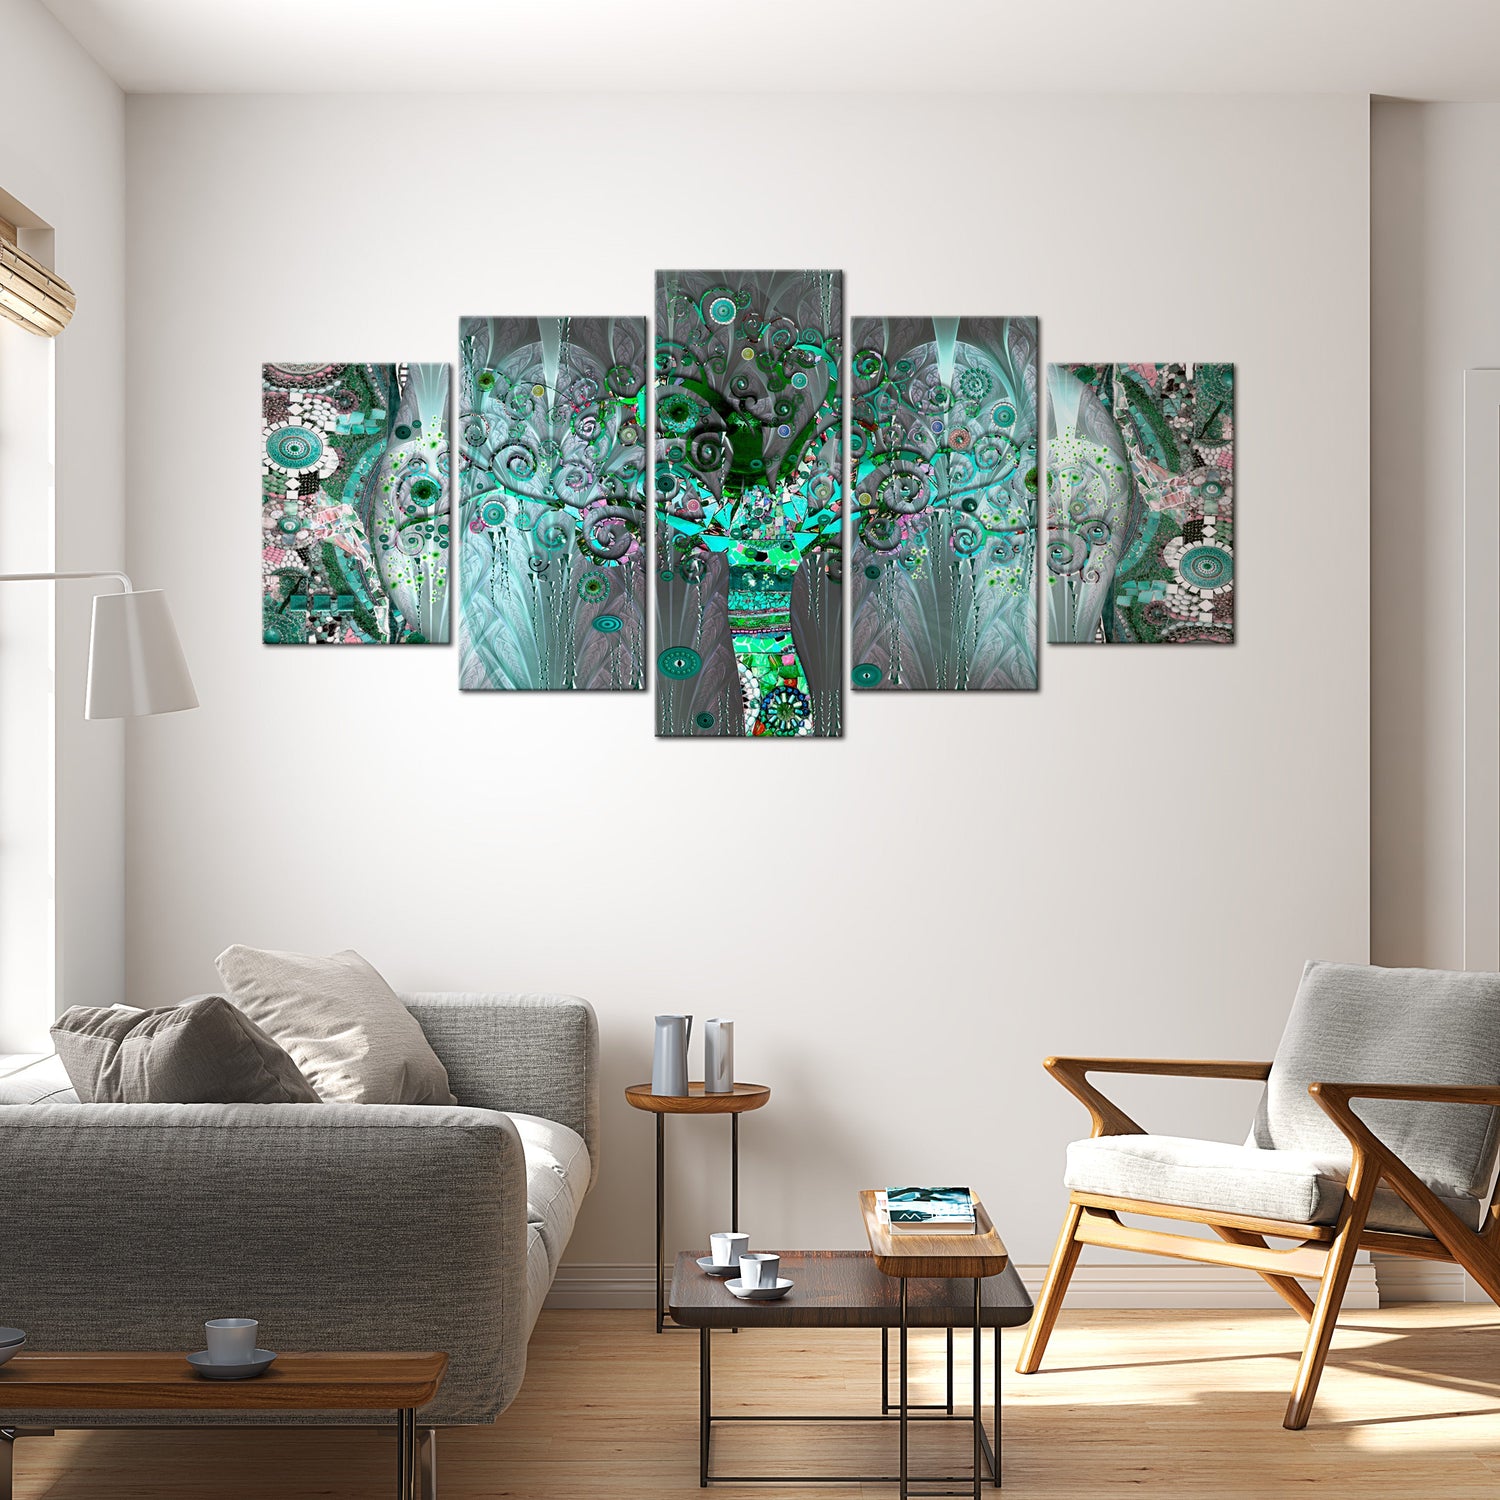 Abstract Canvas Wall Art - Mosaic Tree - 5 Pieces